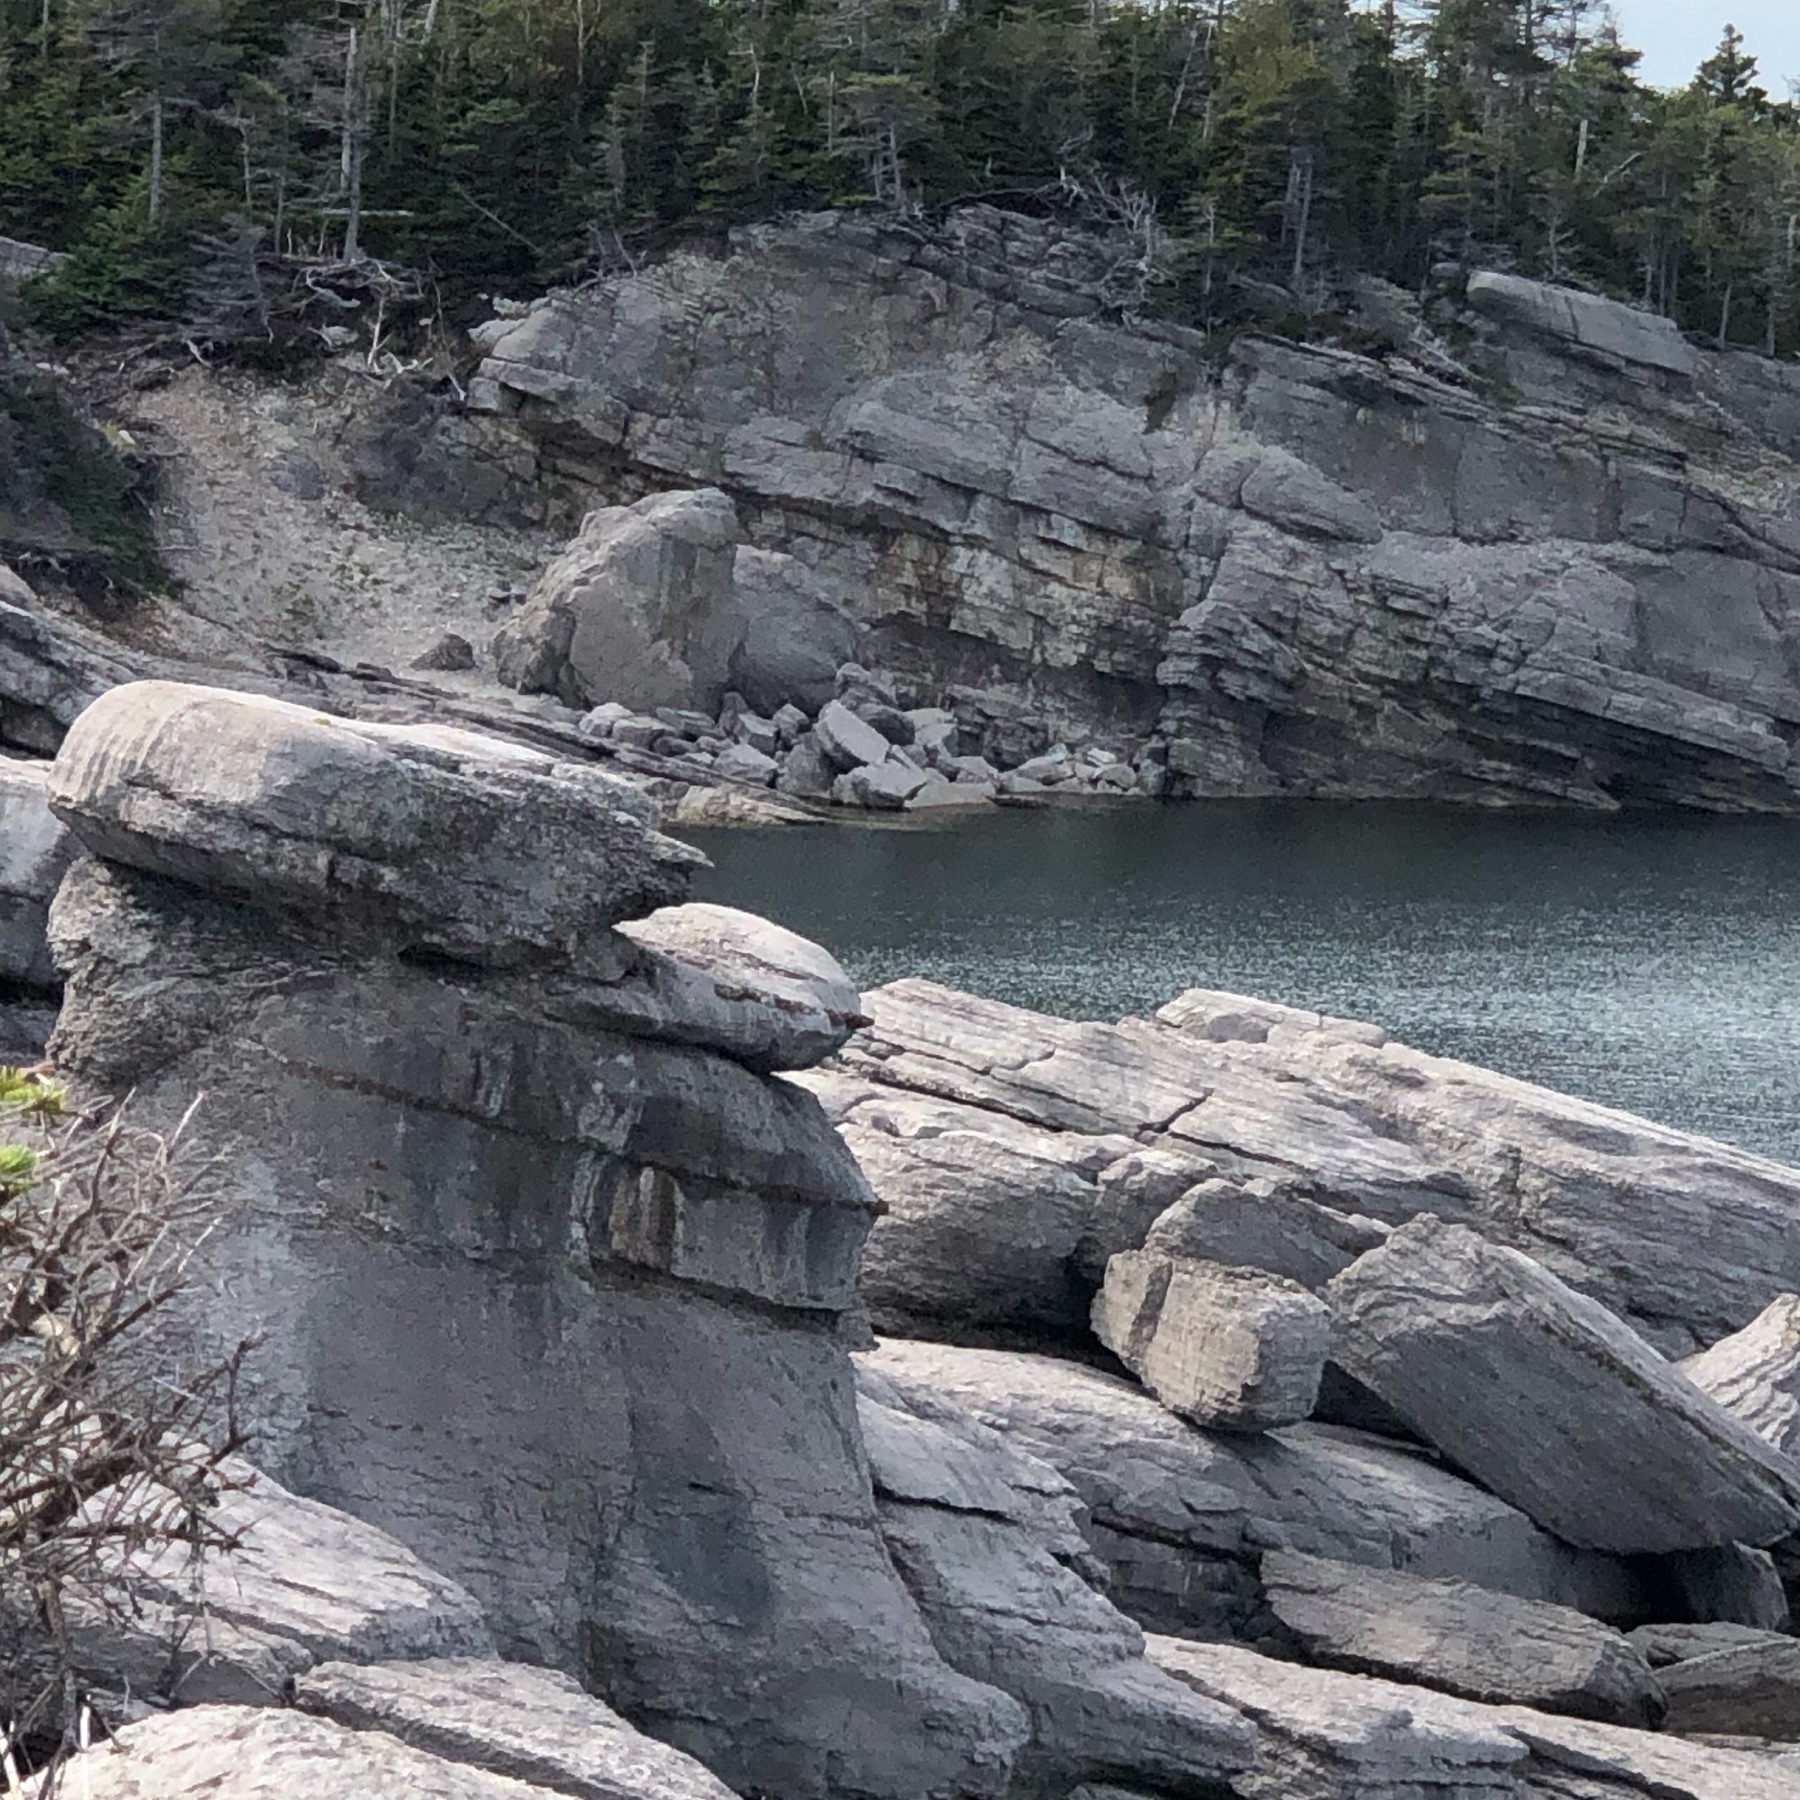 oddly shaped rocks surrounding a cove